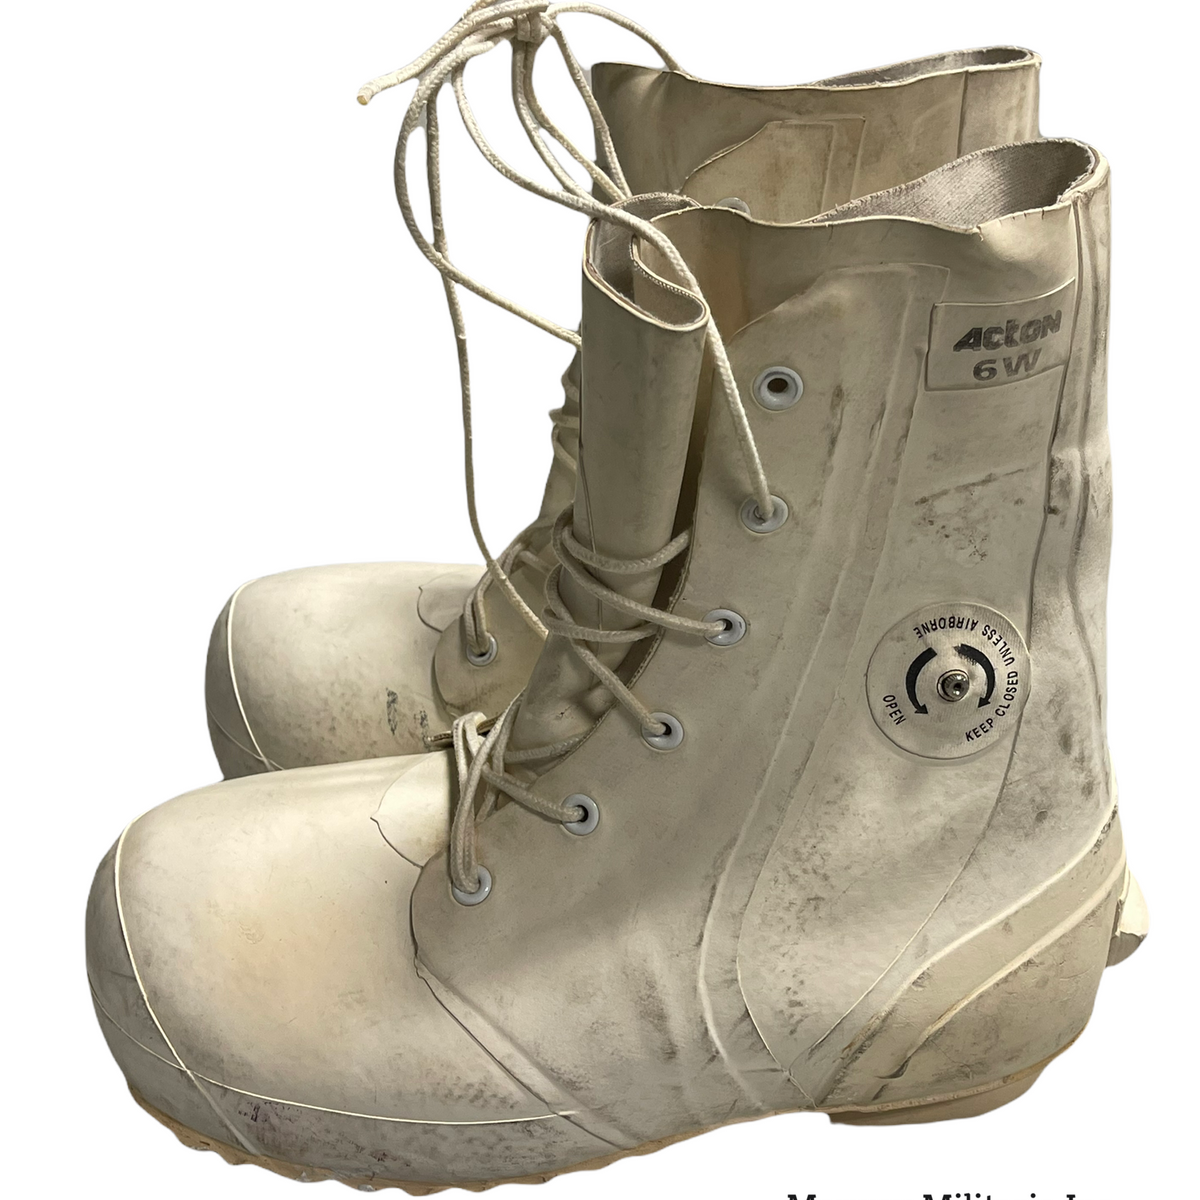 US Military Bunny Boots (BATA/MINER used)